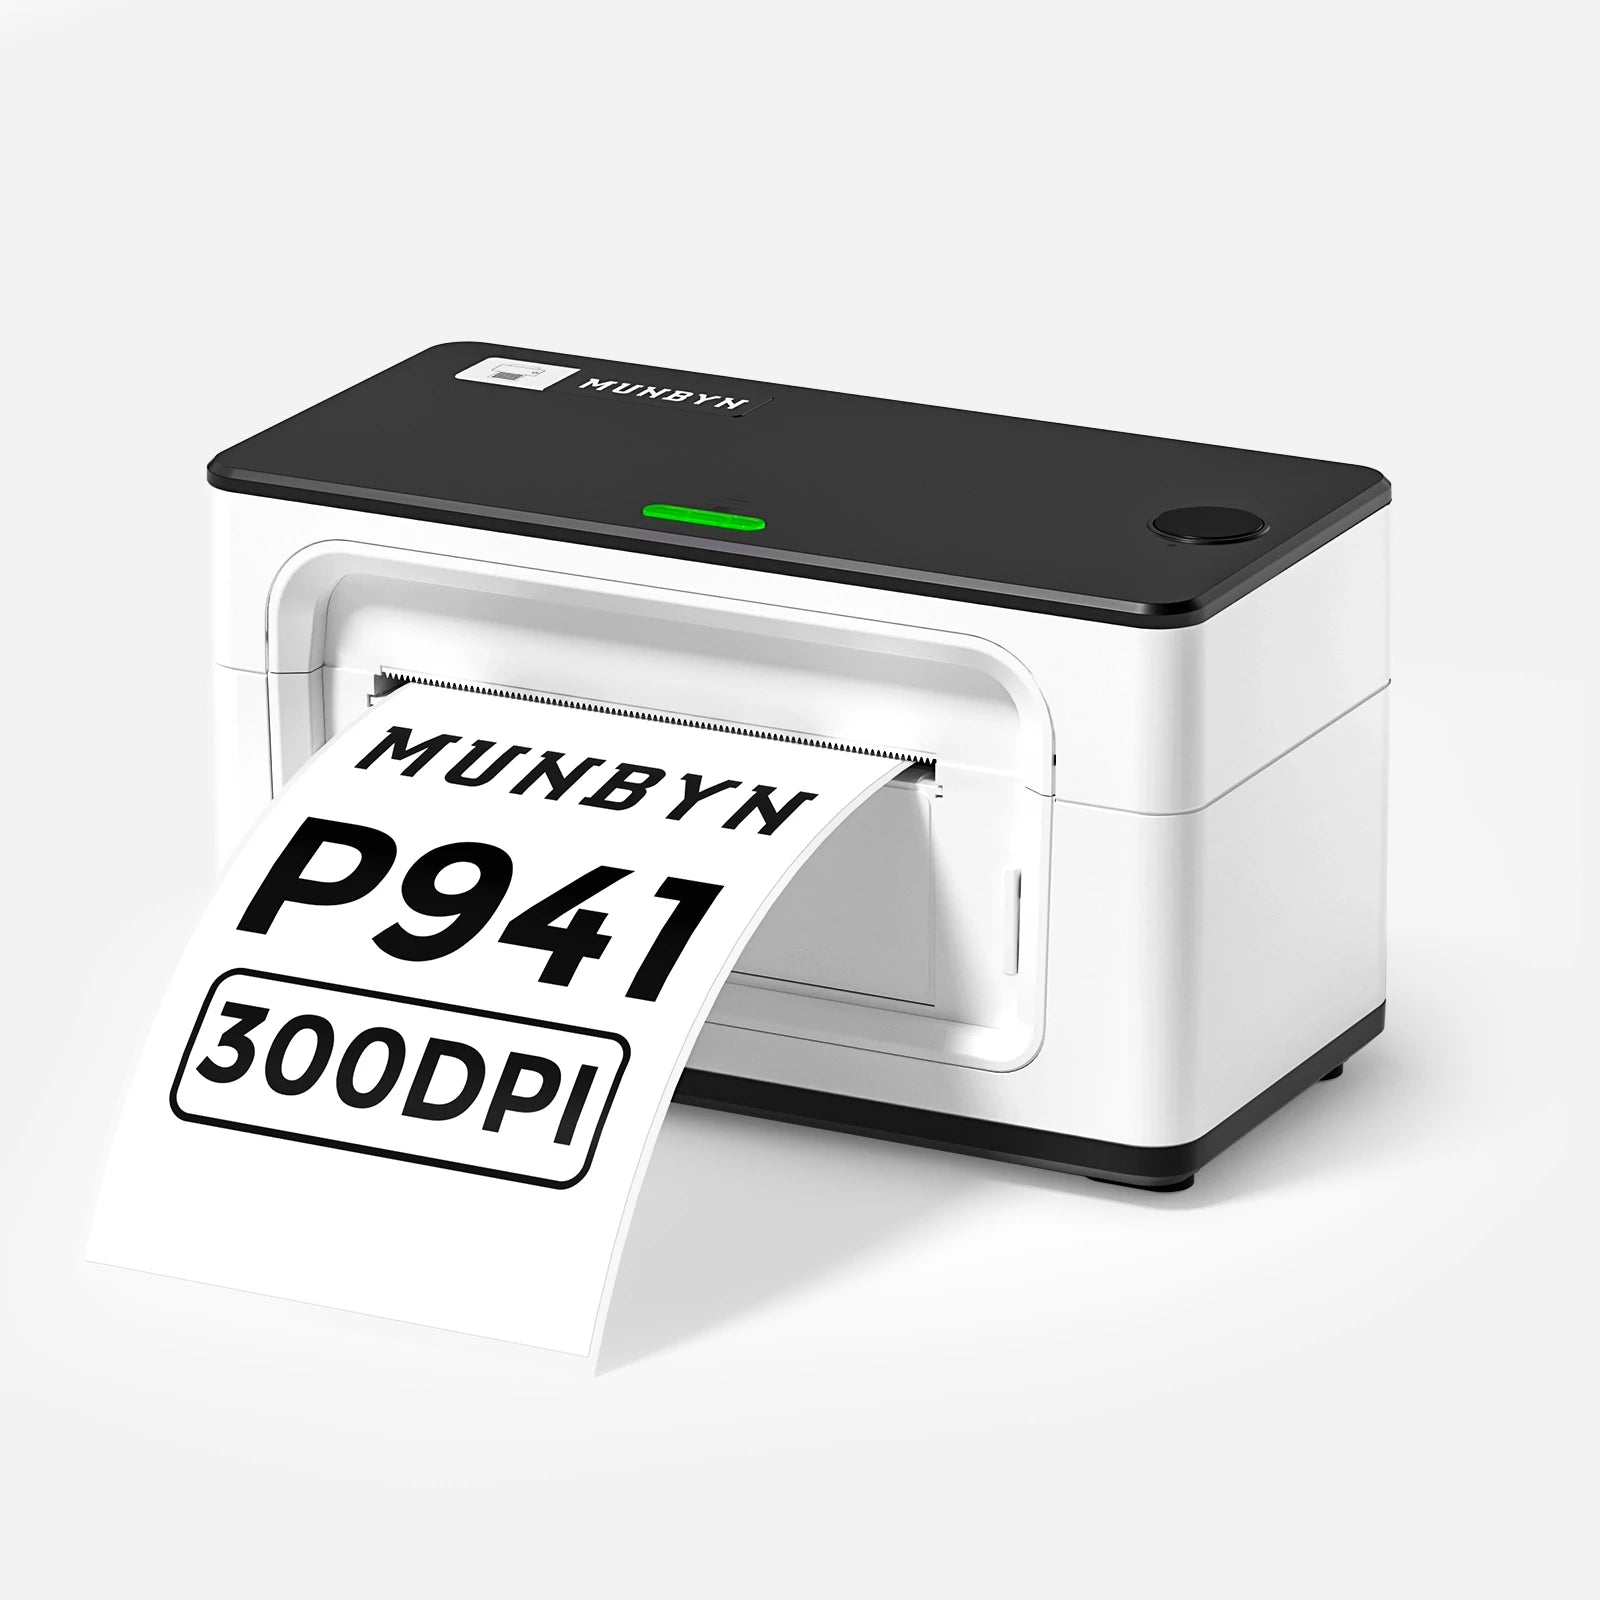 MUNBYN provides 300DPI high-quality thermal label printers.